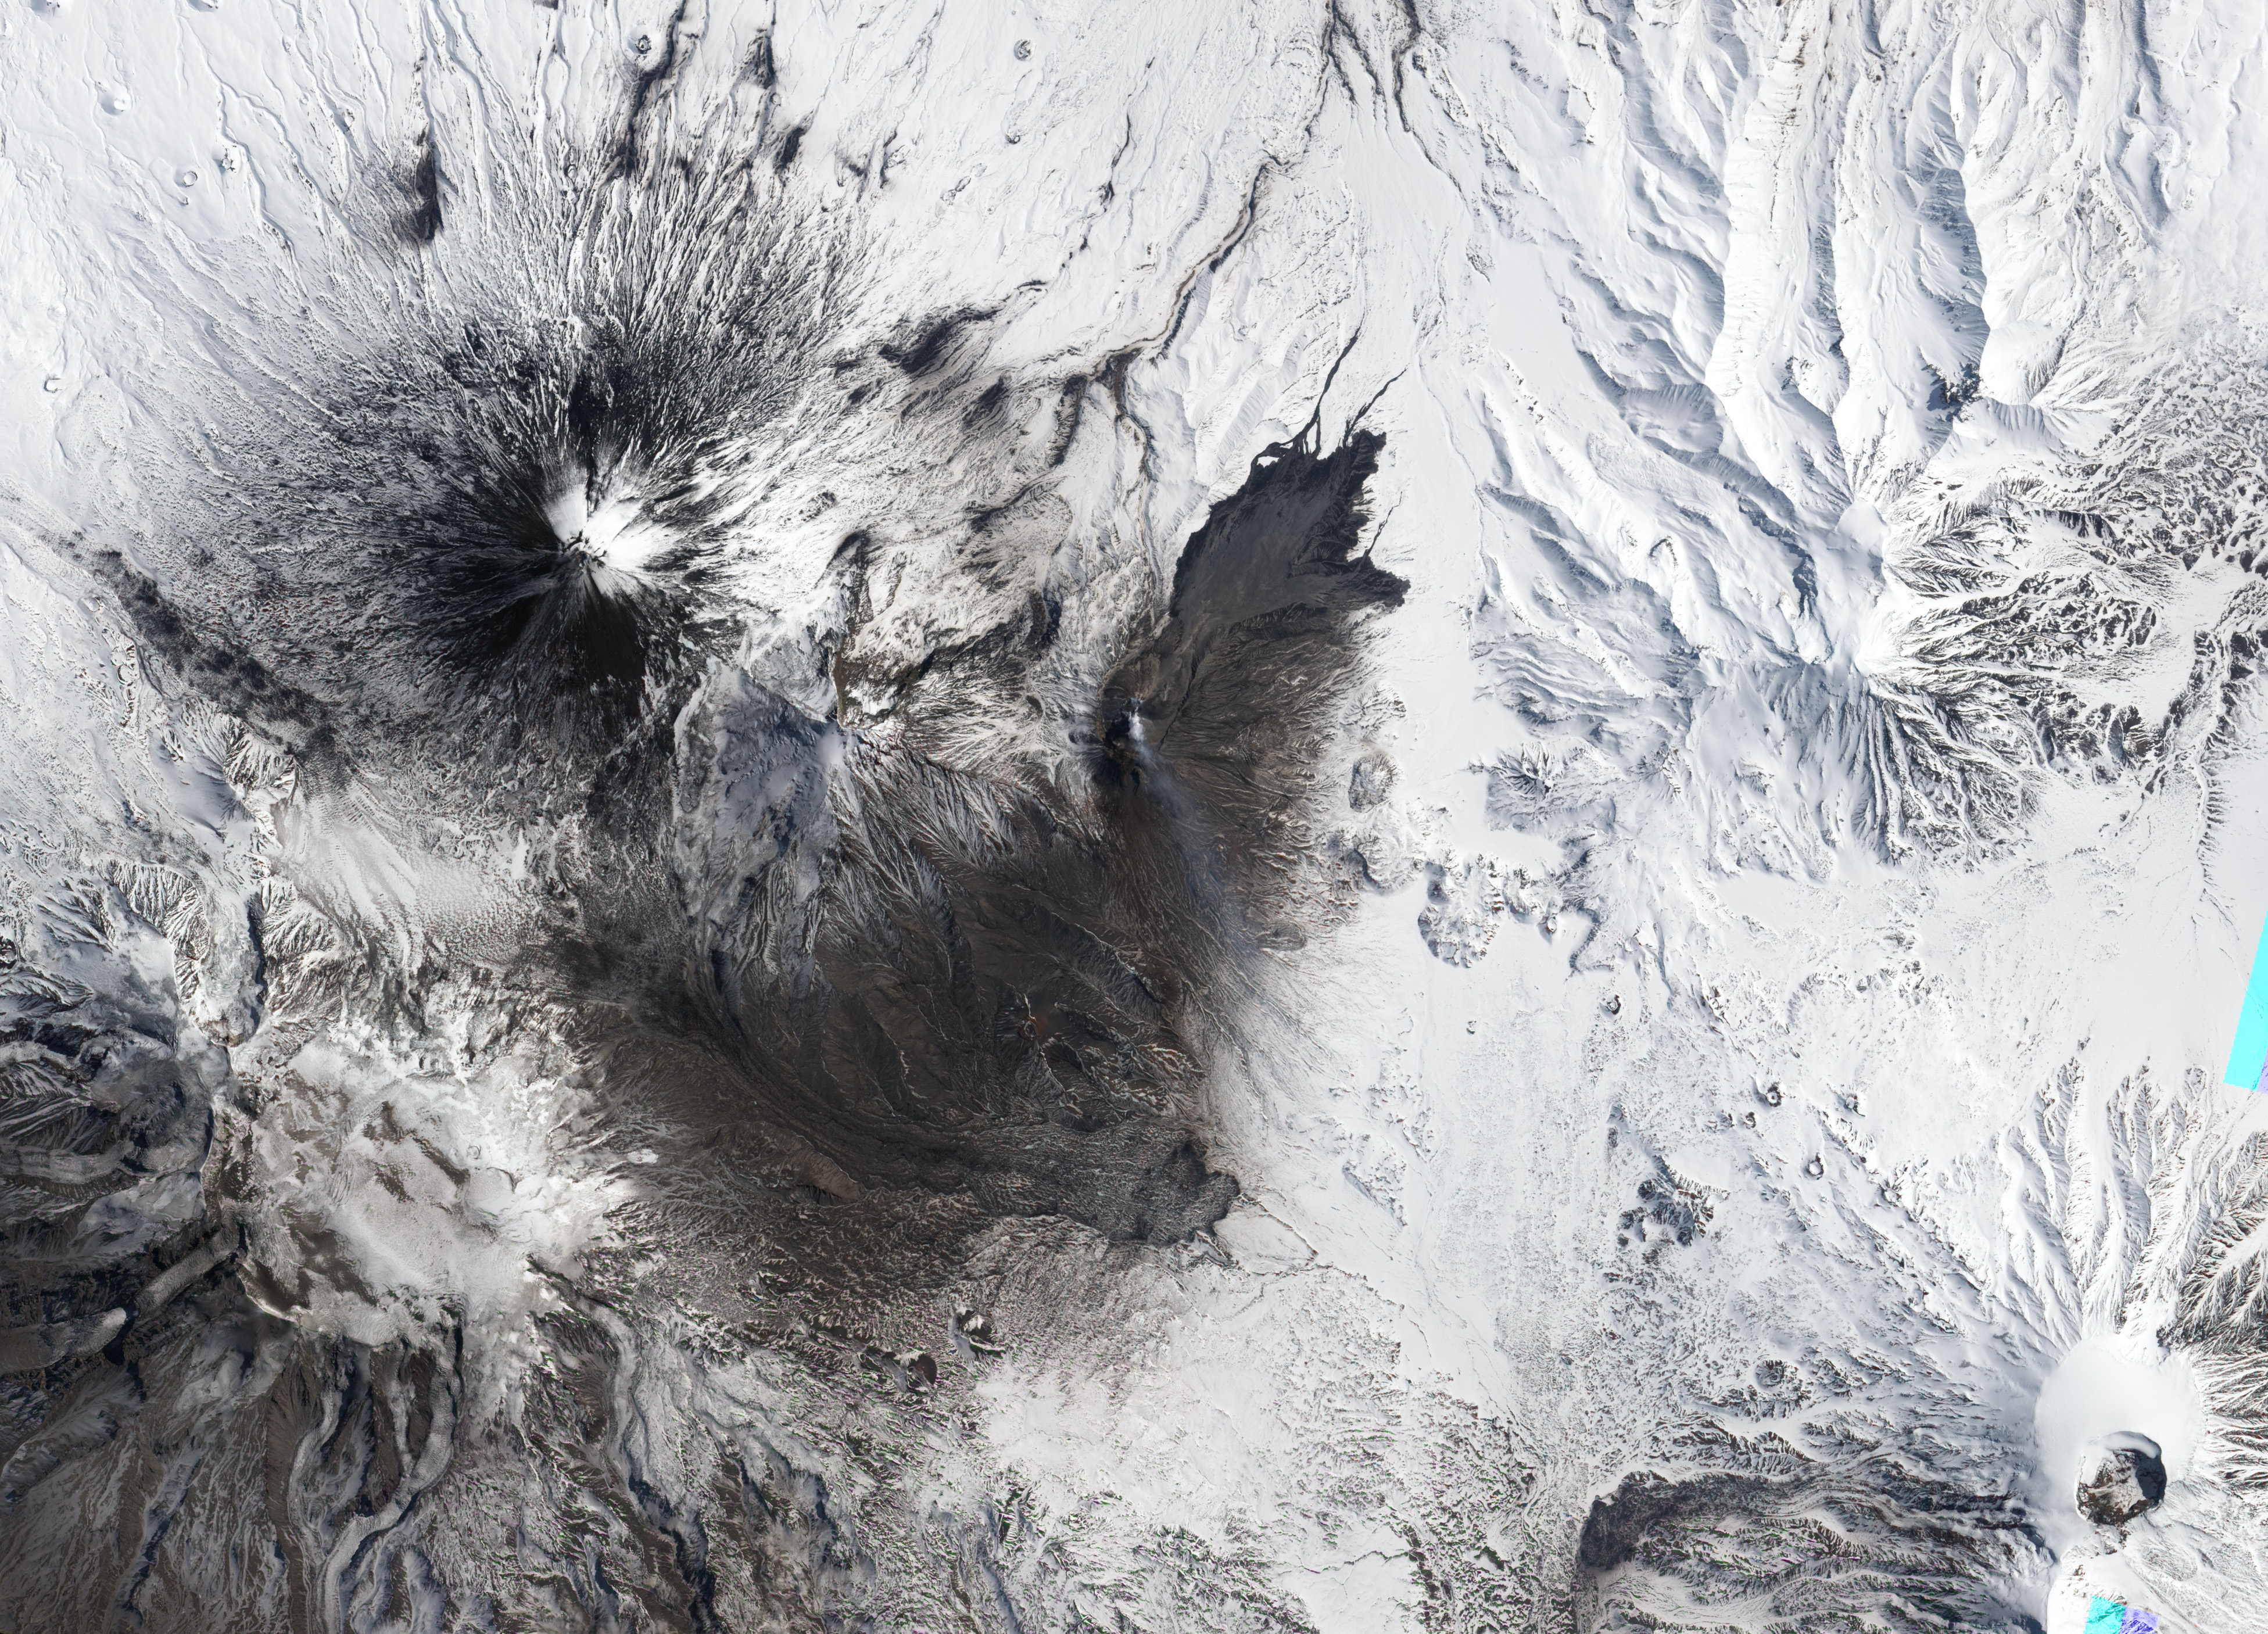 Le volcan Bezymianny, dans la péninsule du Kamchatka. © Nasa Earth Observatory